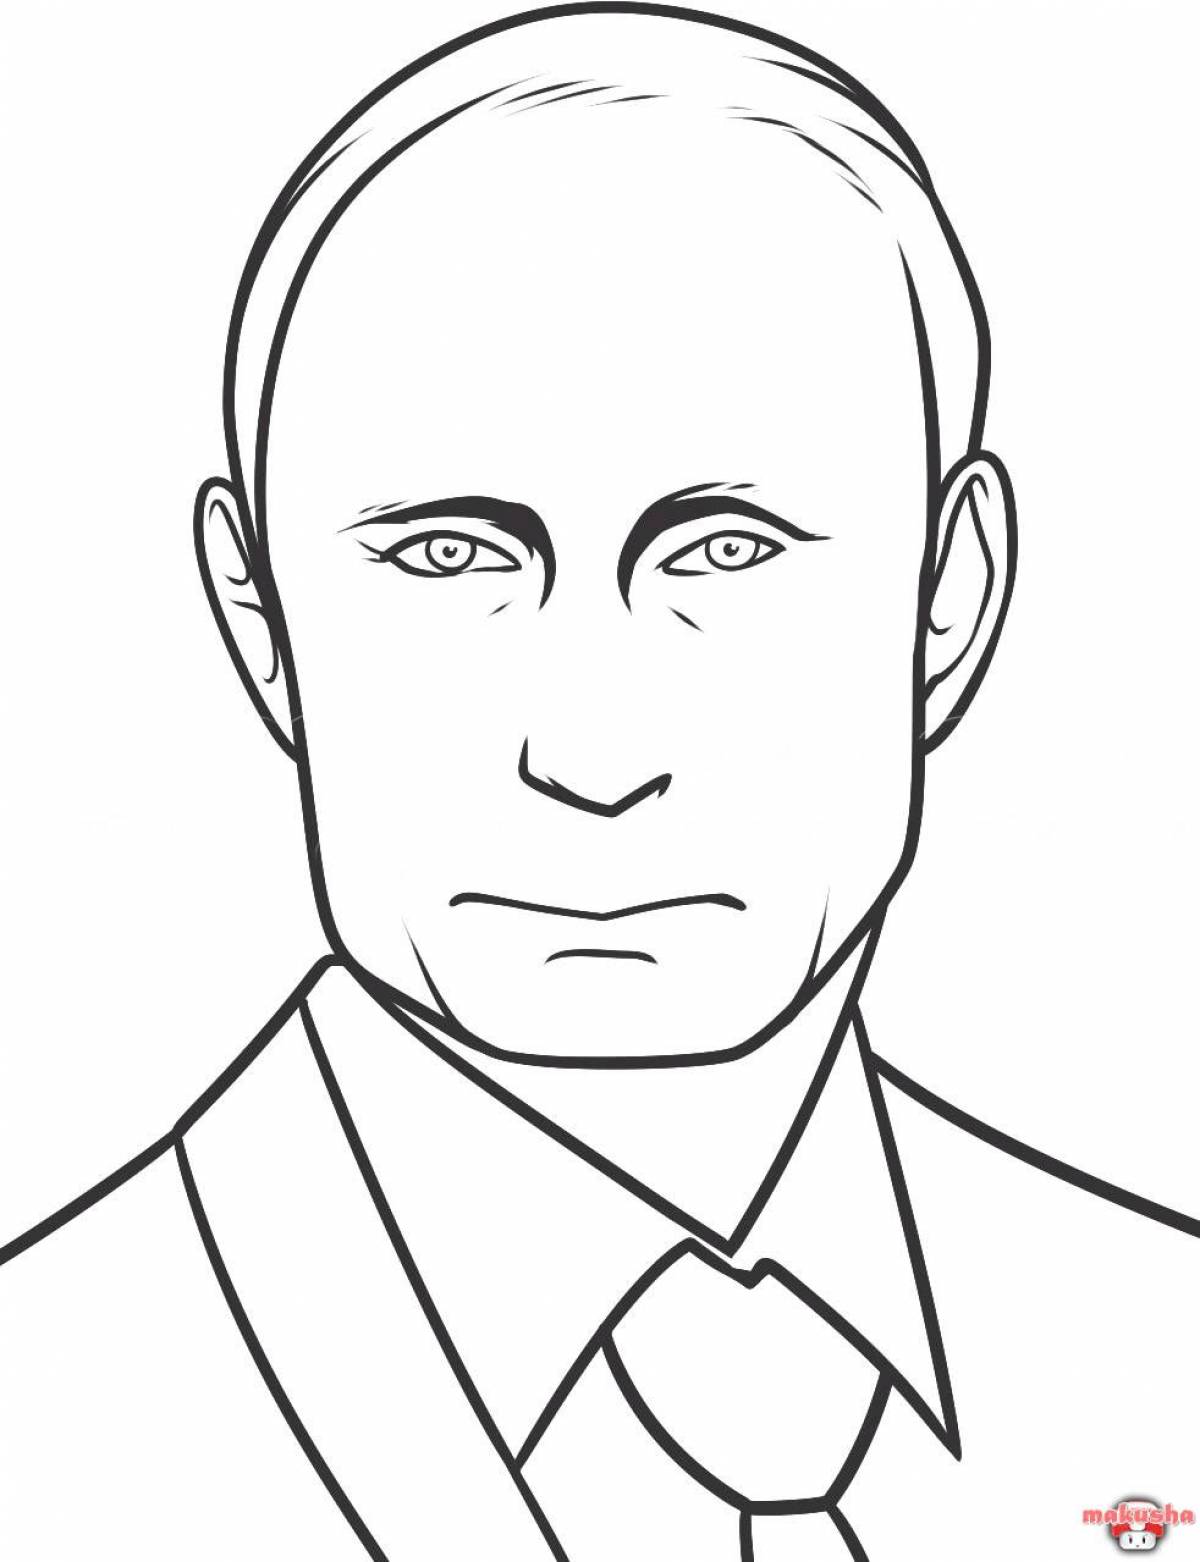 Coloring page inviting Putin